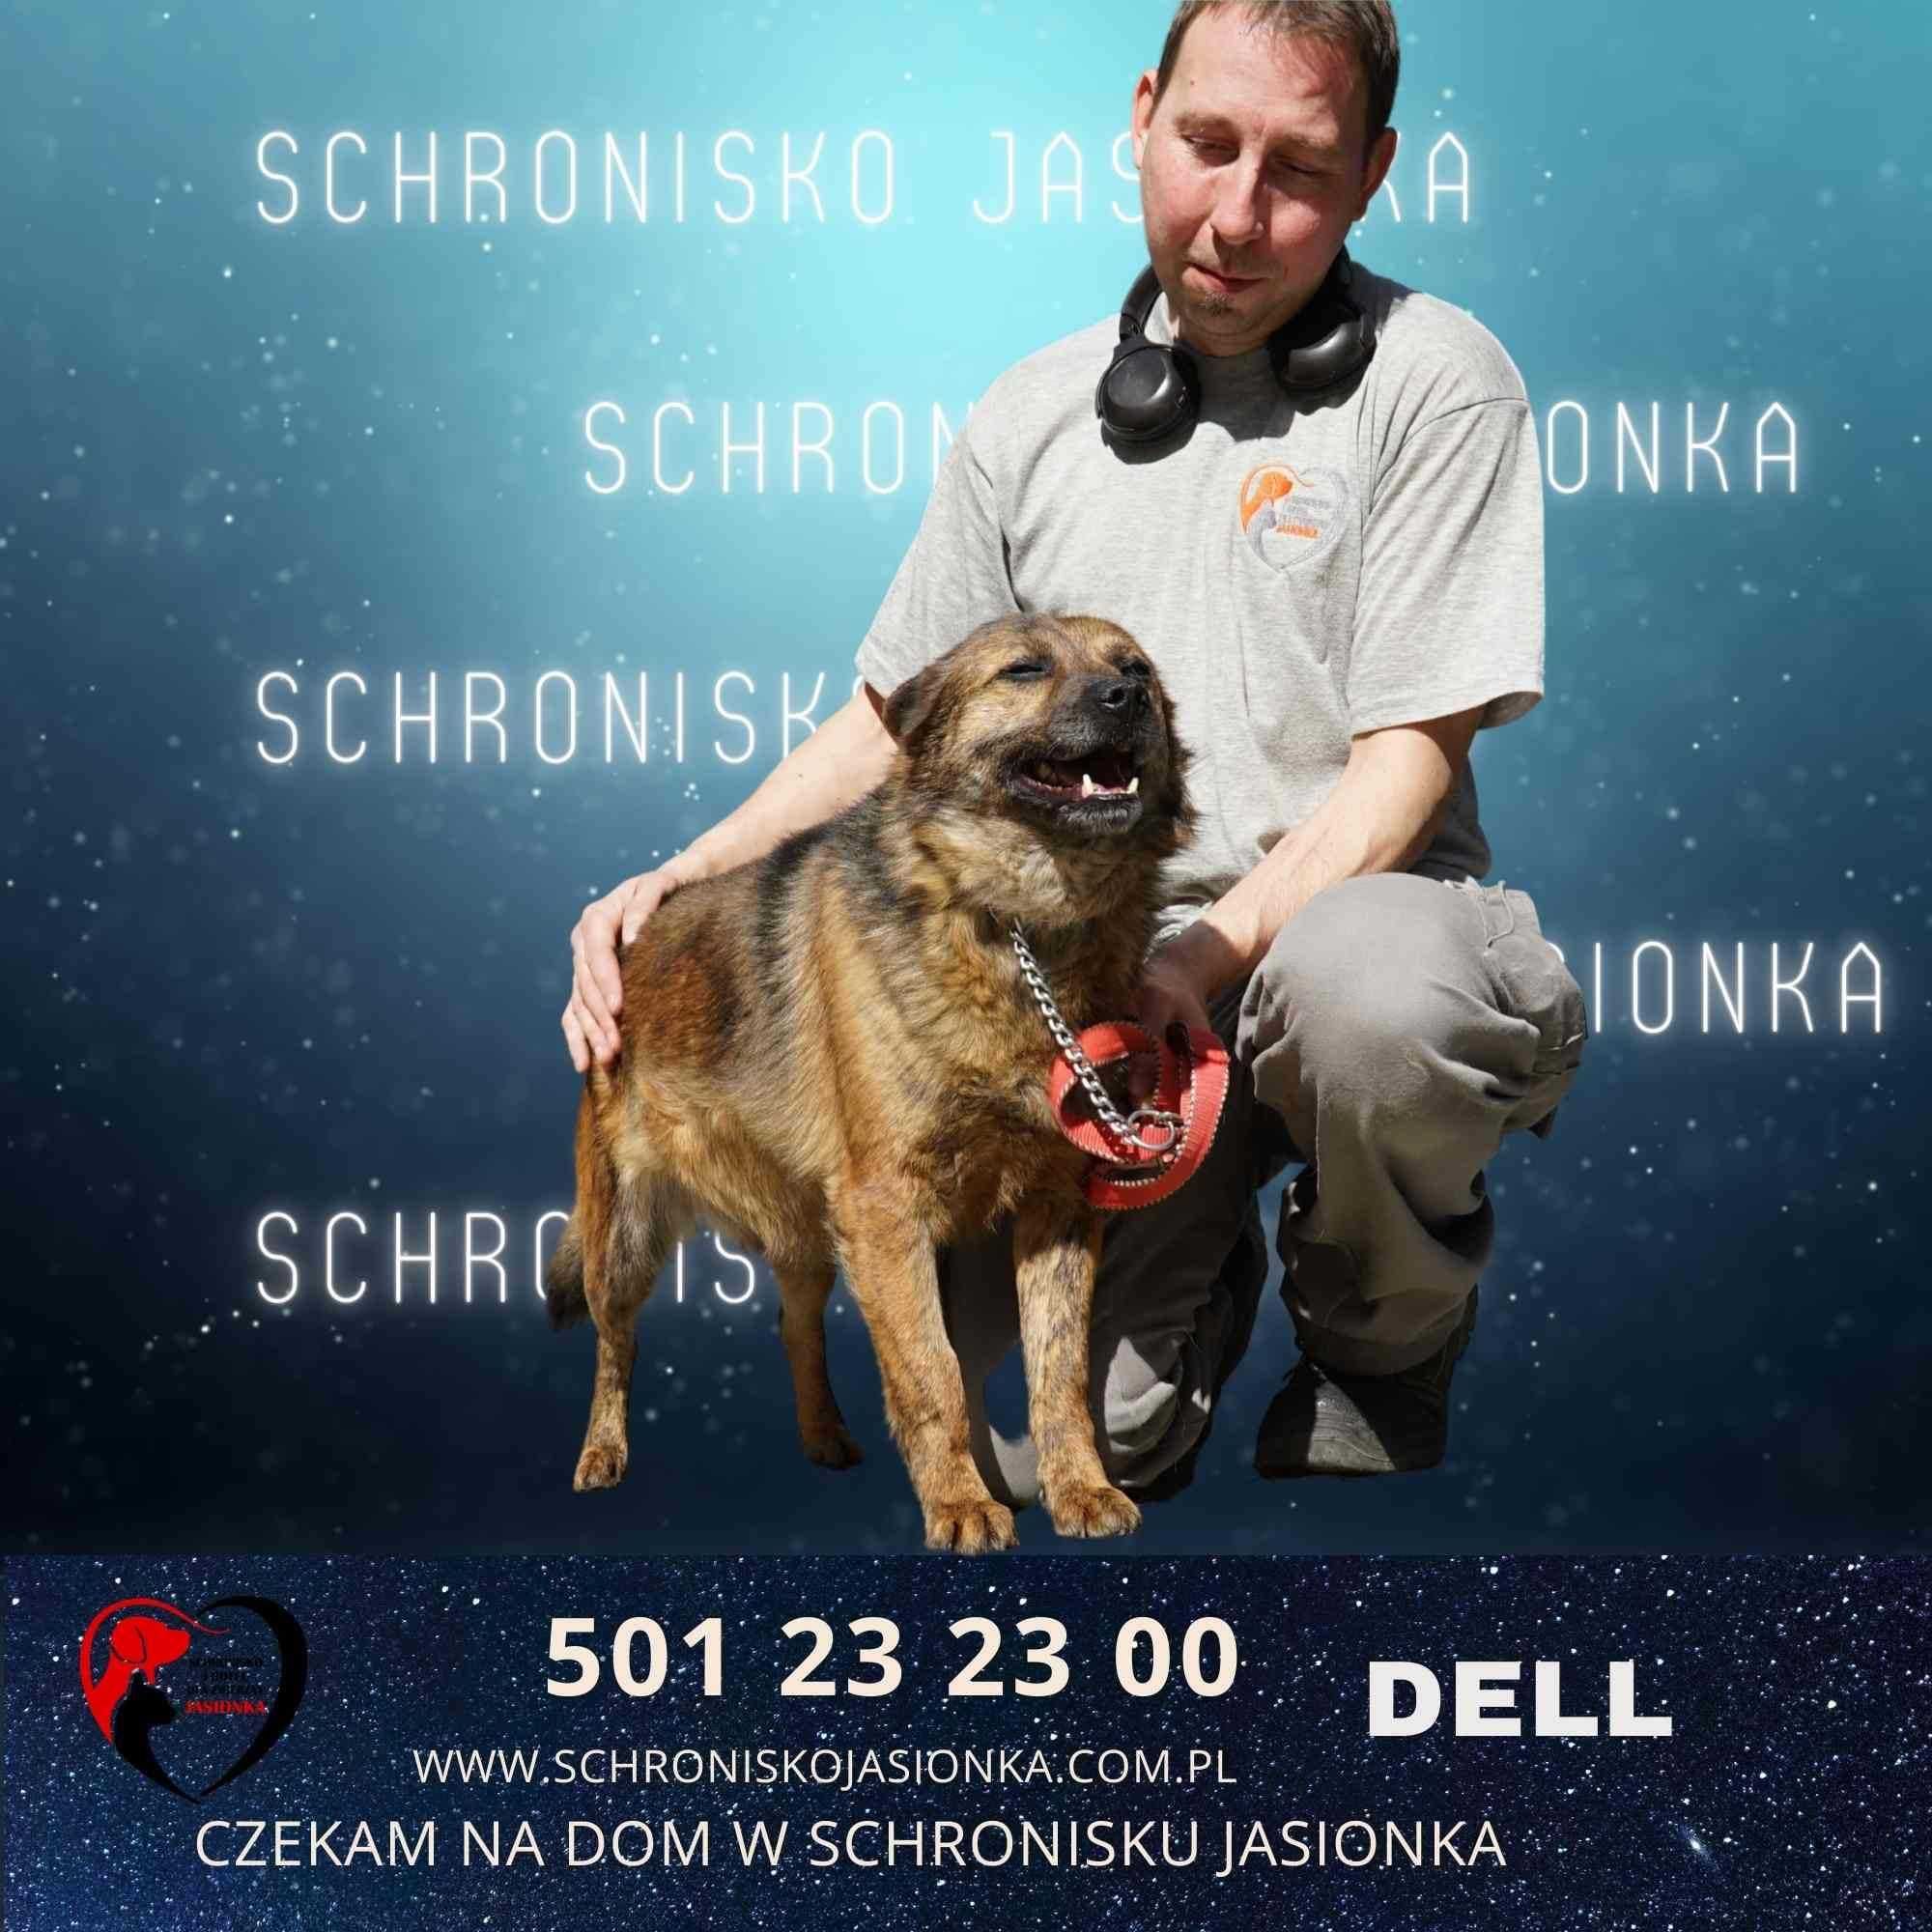 Dell- do adopcji Schronisko Jasionka